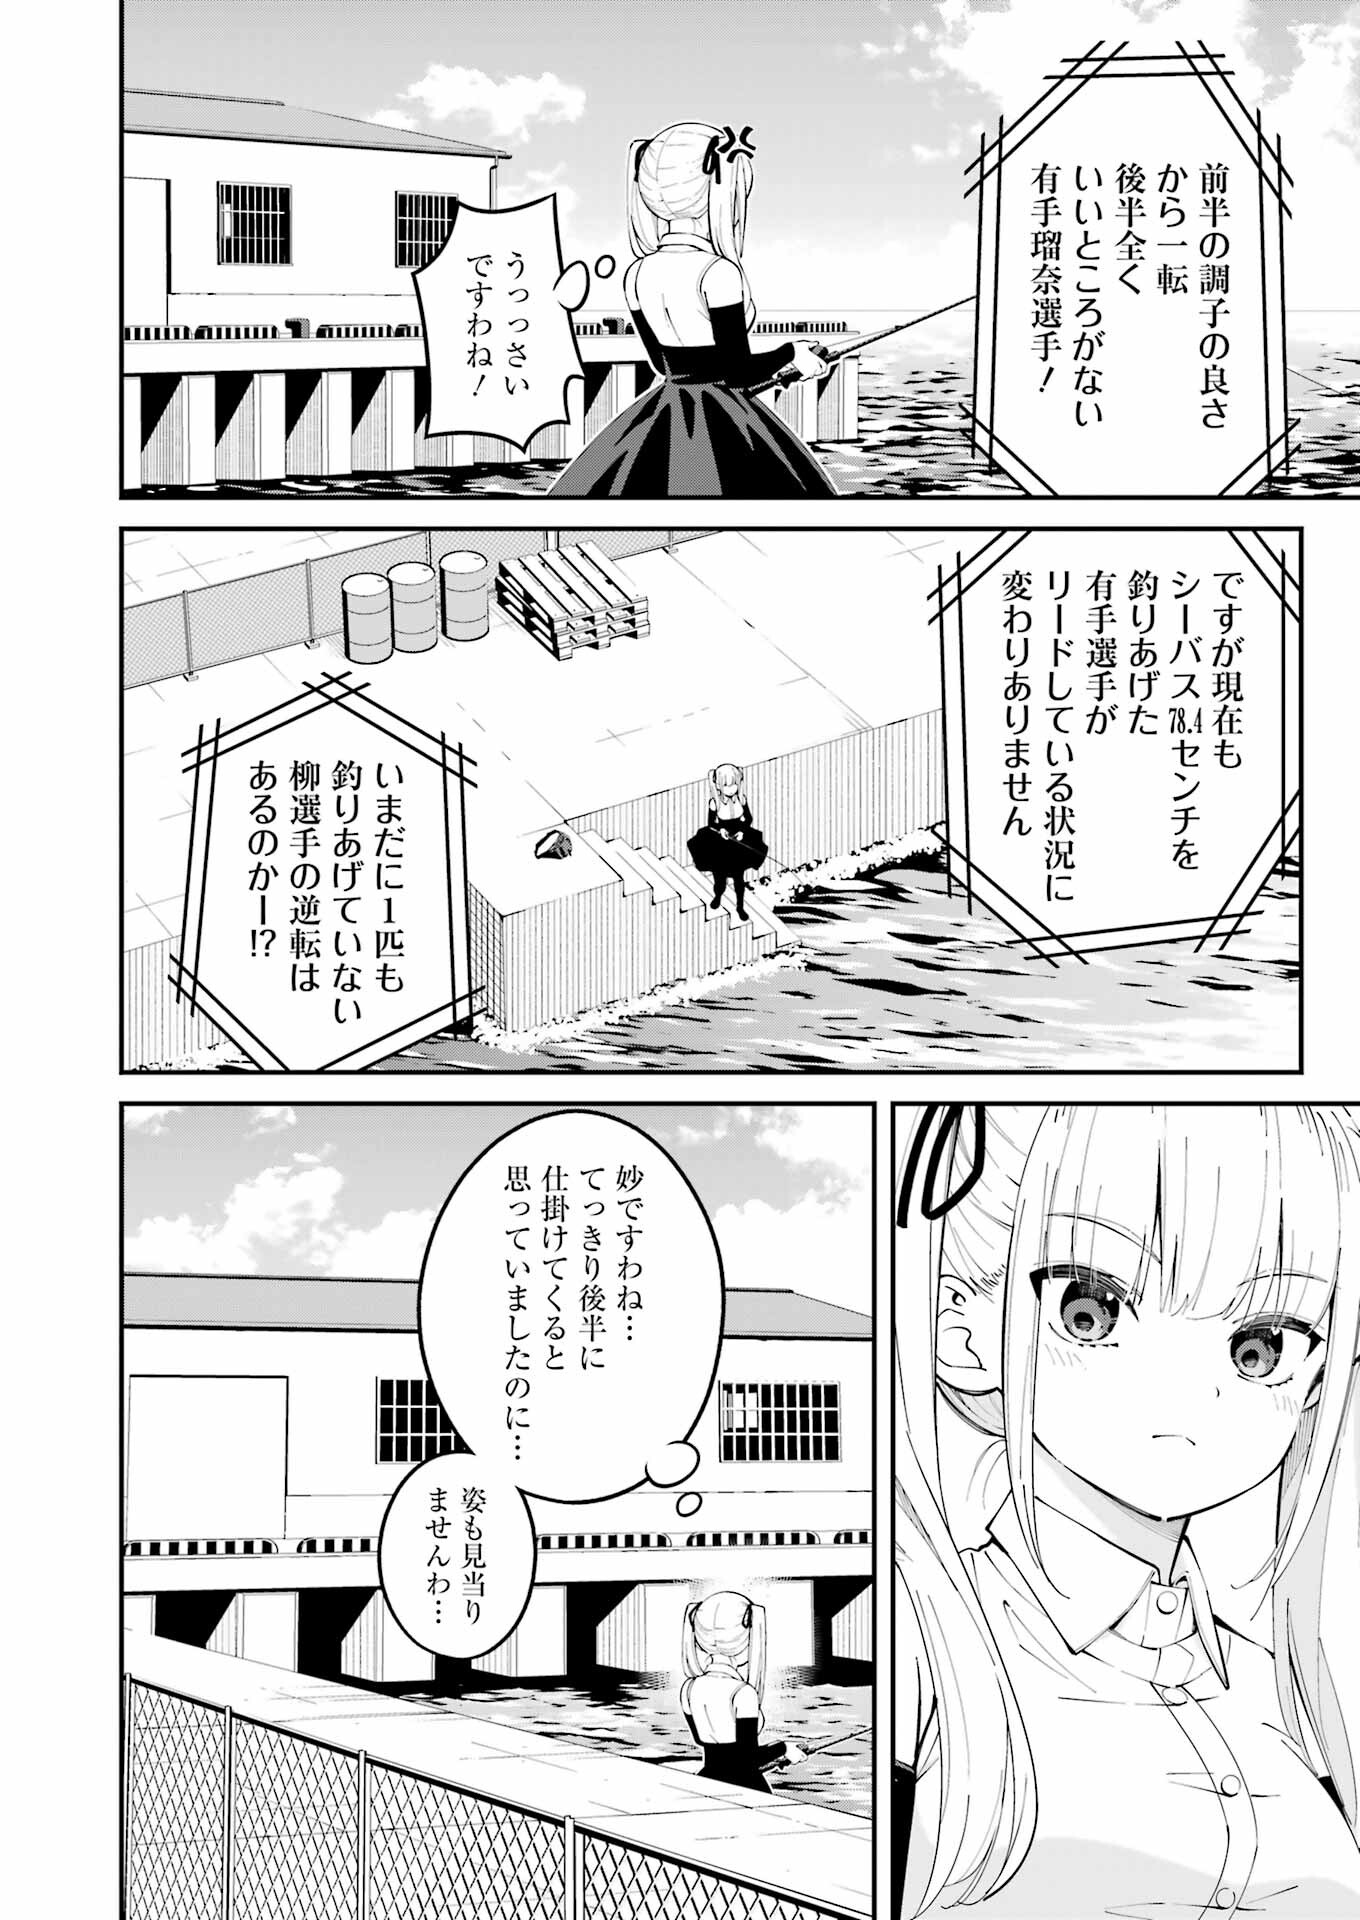 Tsuri Komachi - Chapter 57 - Page 2